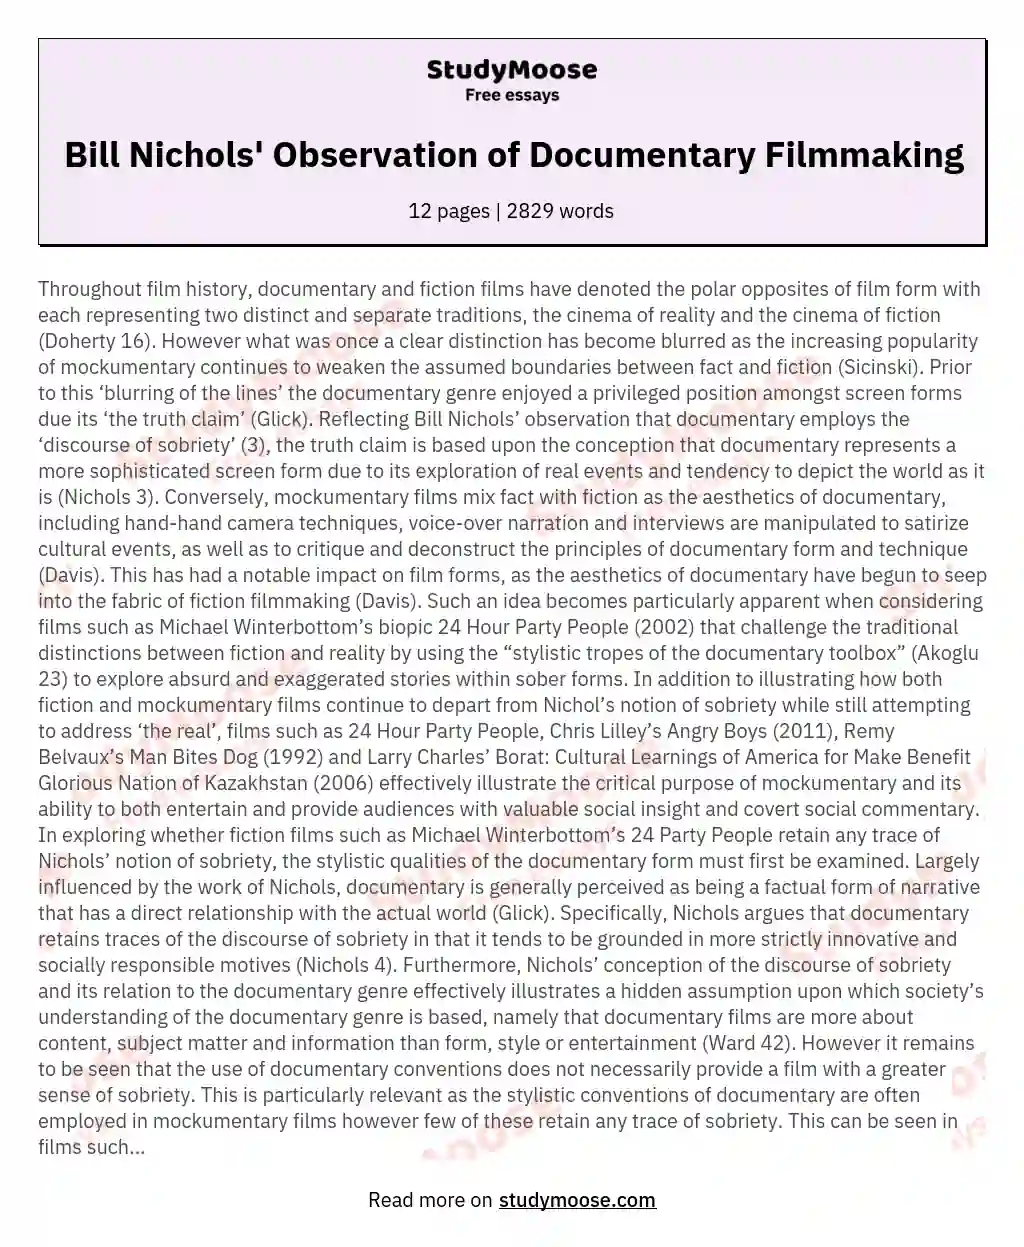 Bill Nichols' Observation of Documentary Filmmaking essay